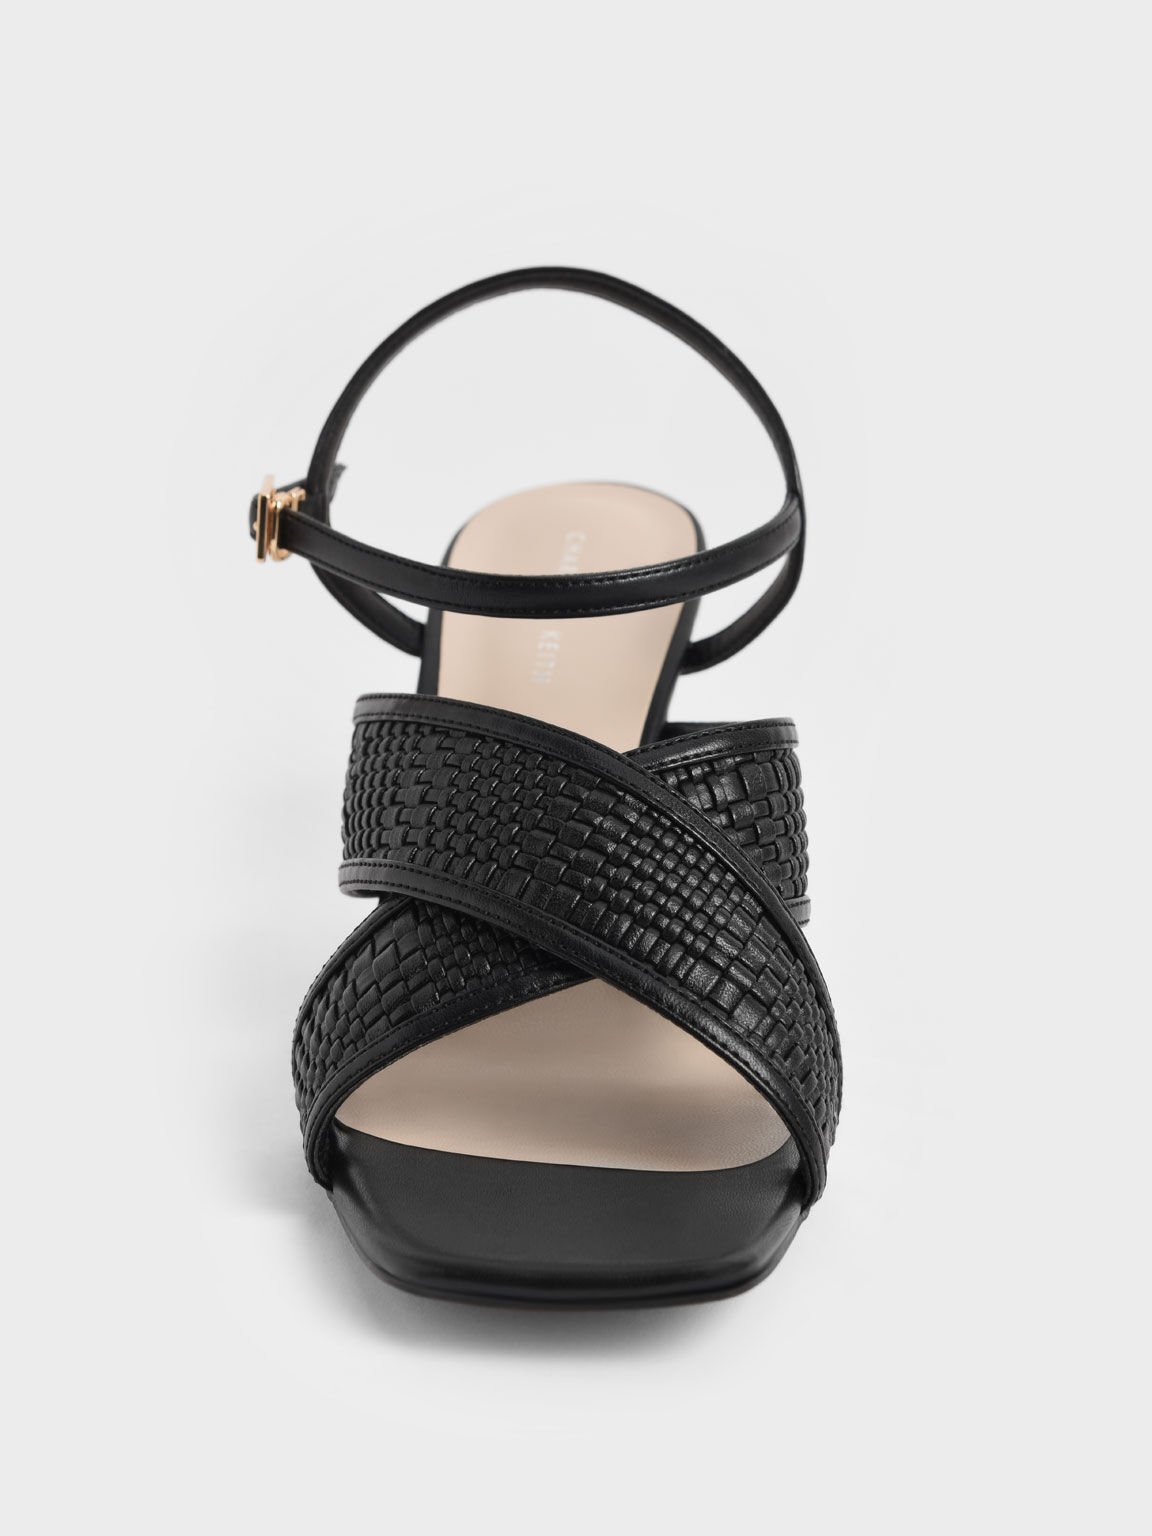 Woven Crossover Slingback Sandals, Black, hi-res